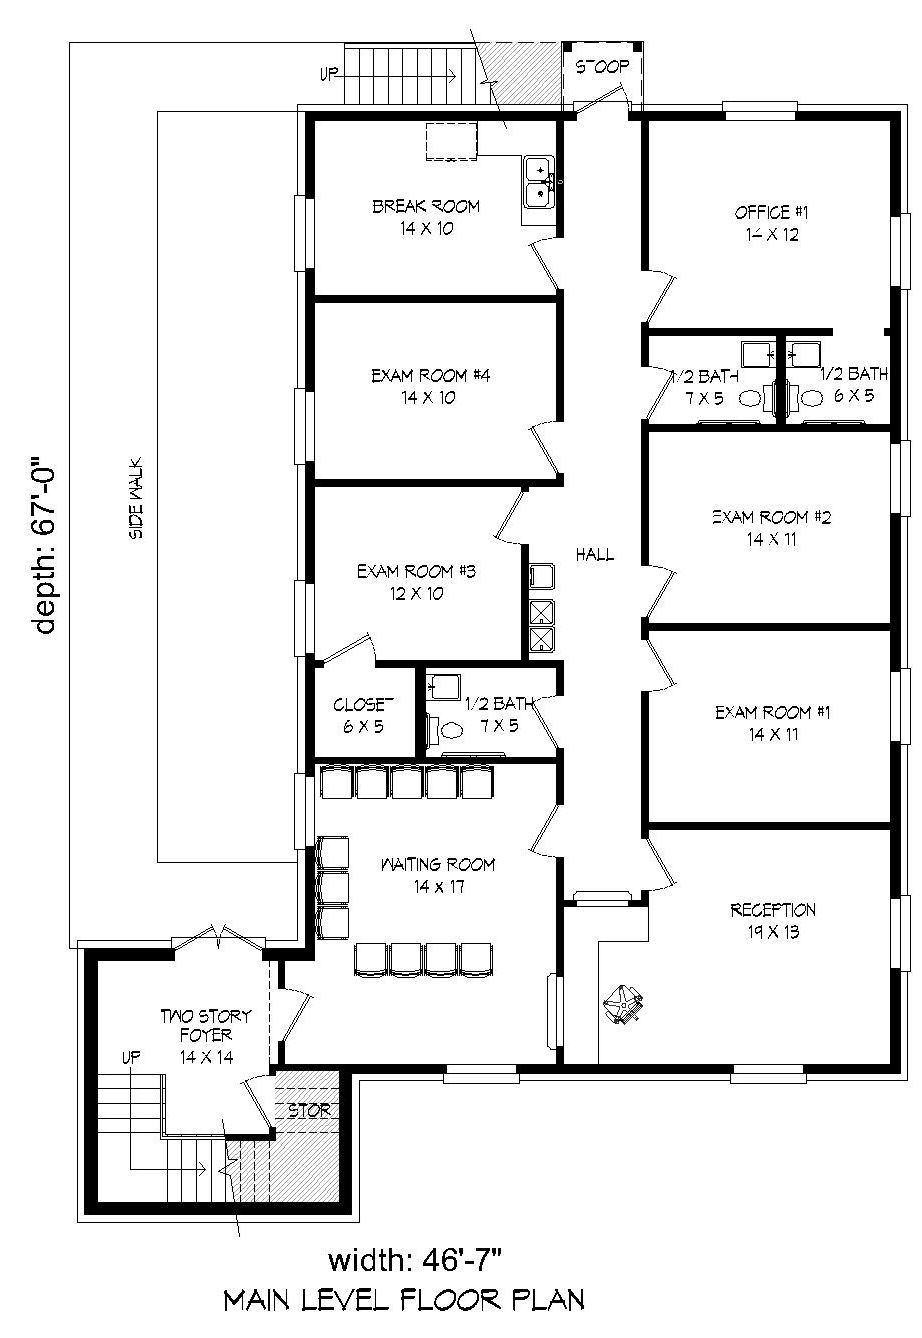 2171-1745-OFFICE-Main Floor